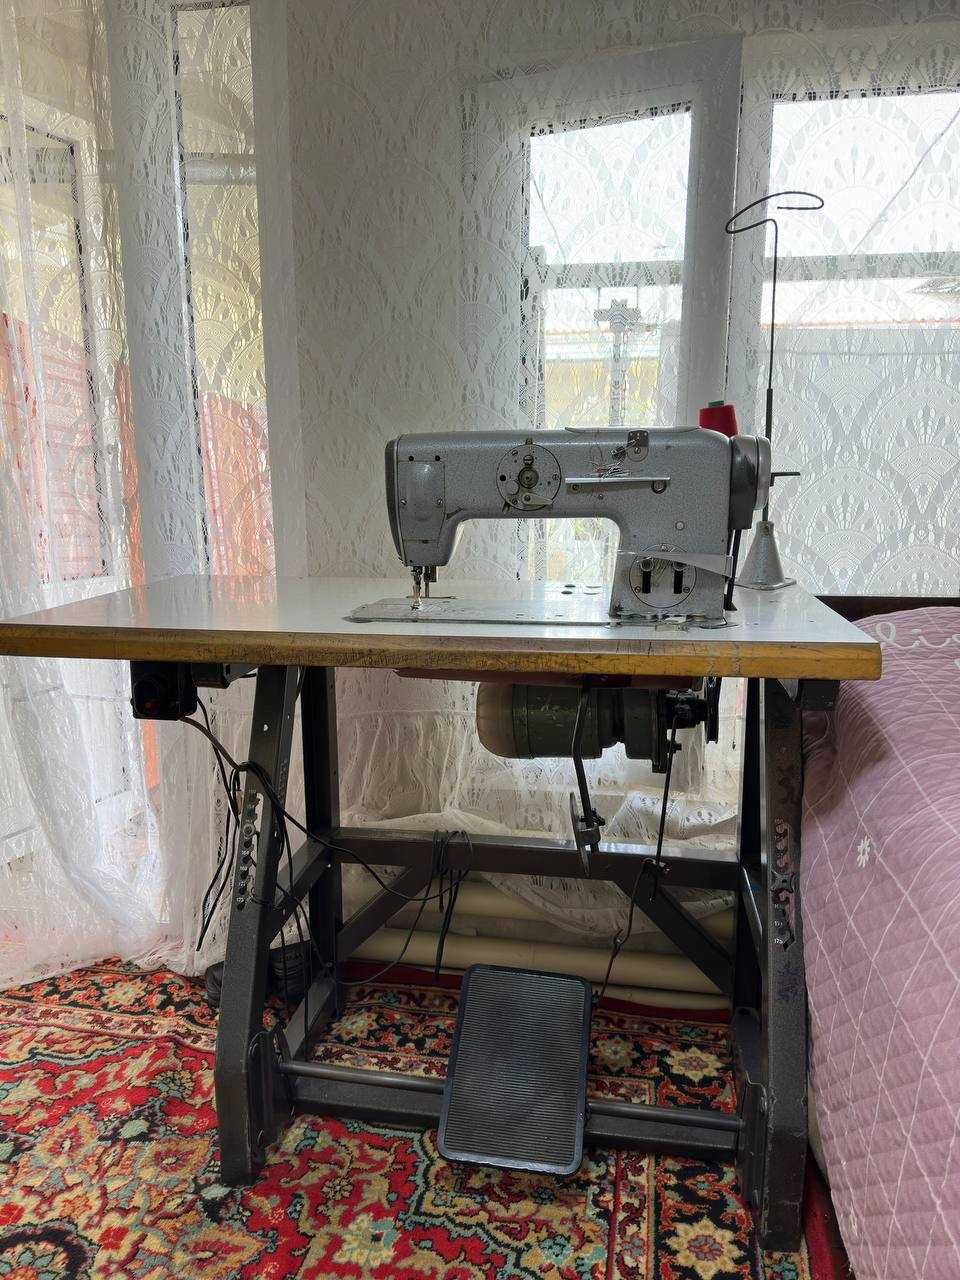 Продается швейная машина / Tikuv Mashinasi Sotiladi /